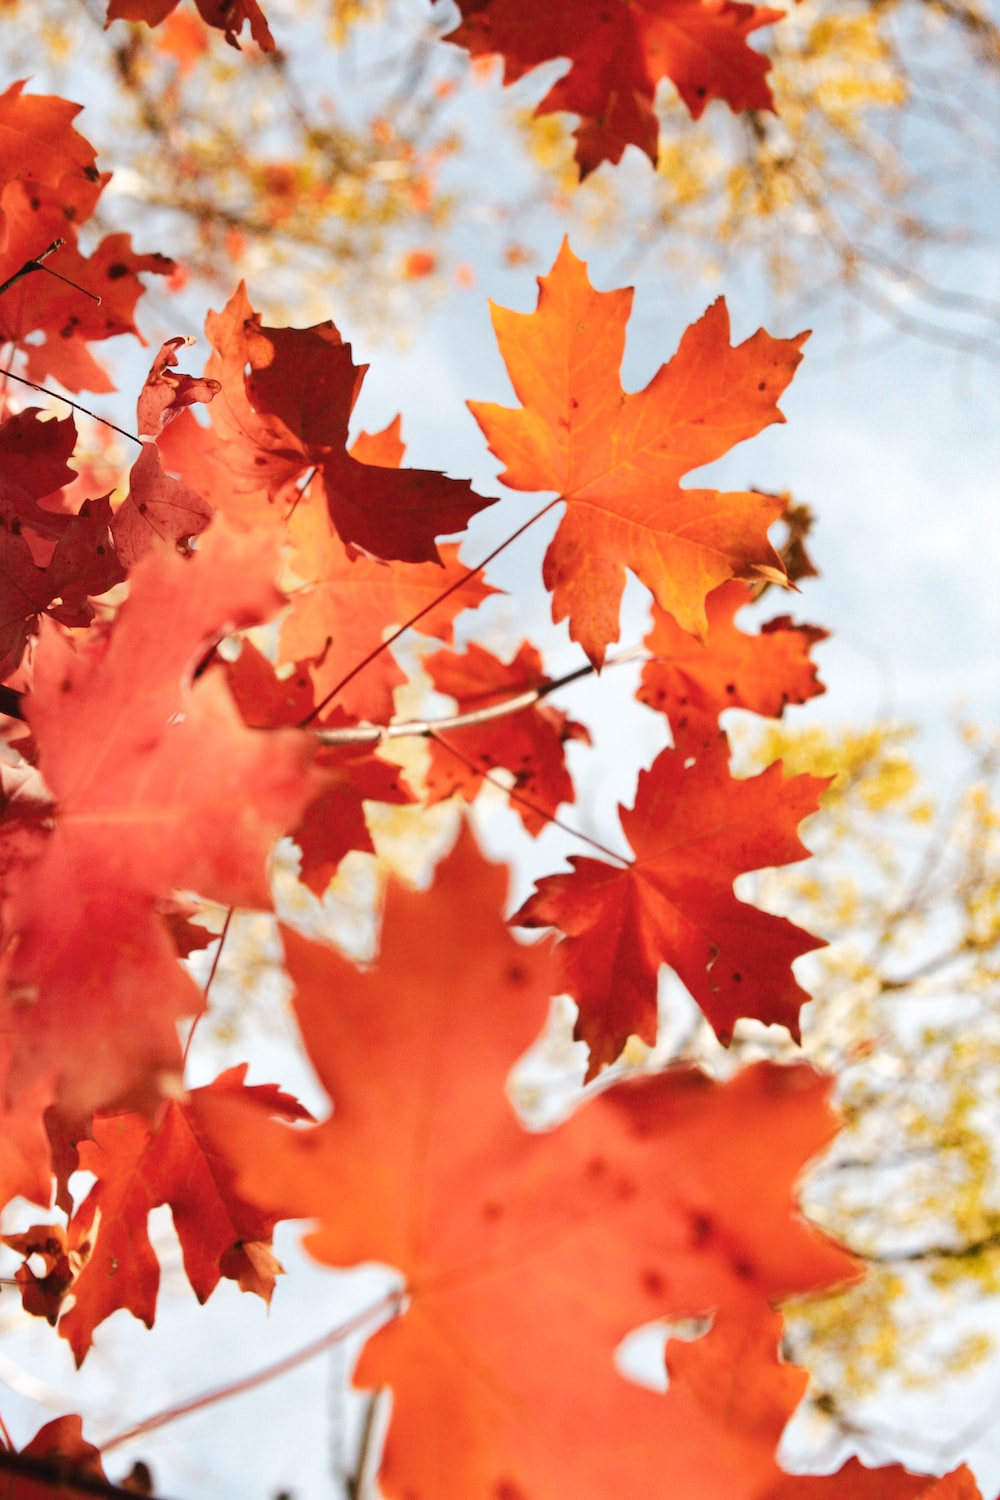 Autumn Image. Download Free Image